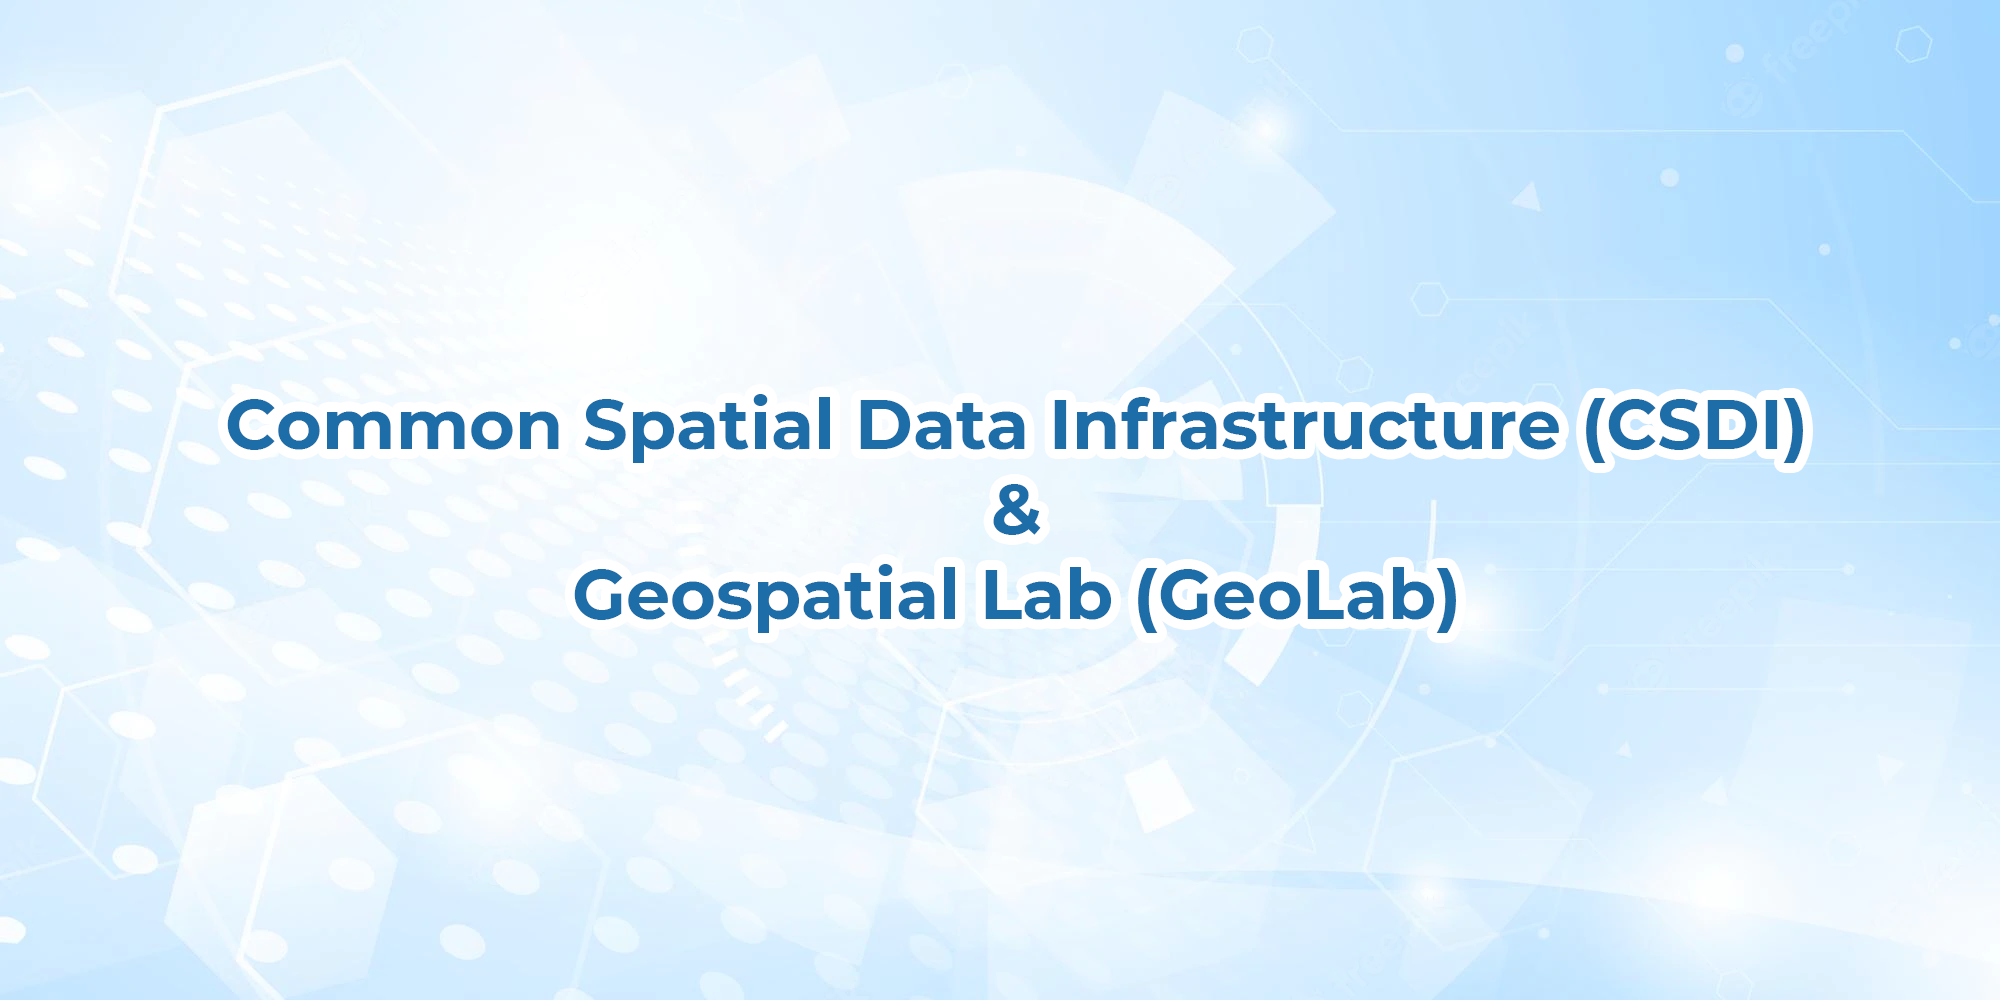 Common Spatial Data Infrastructure (CSDI) & Geospatial Lab (GeoLab)